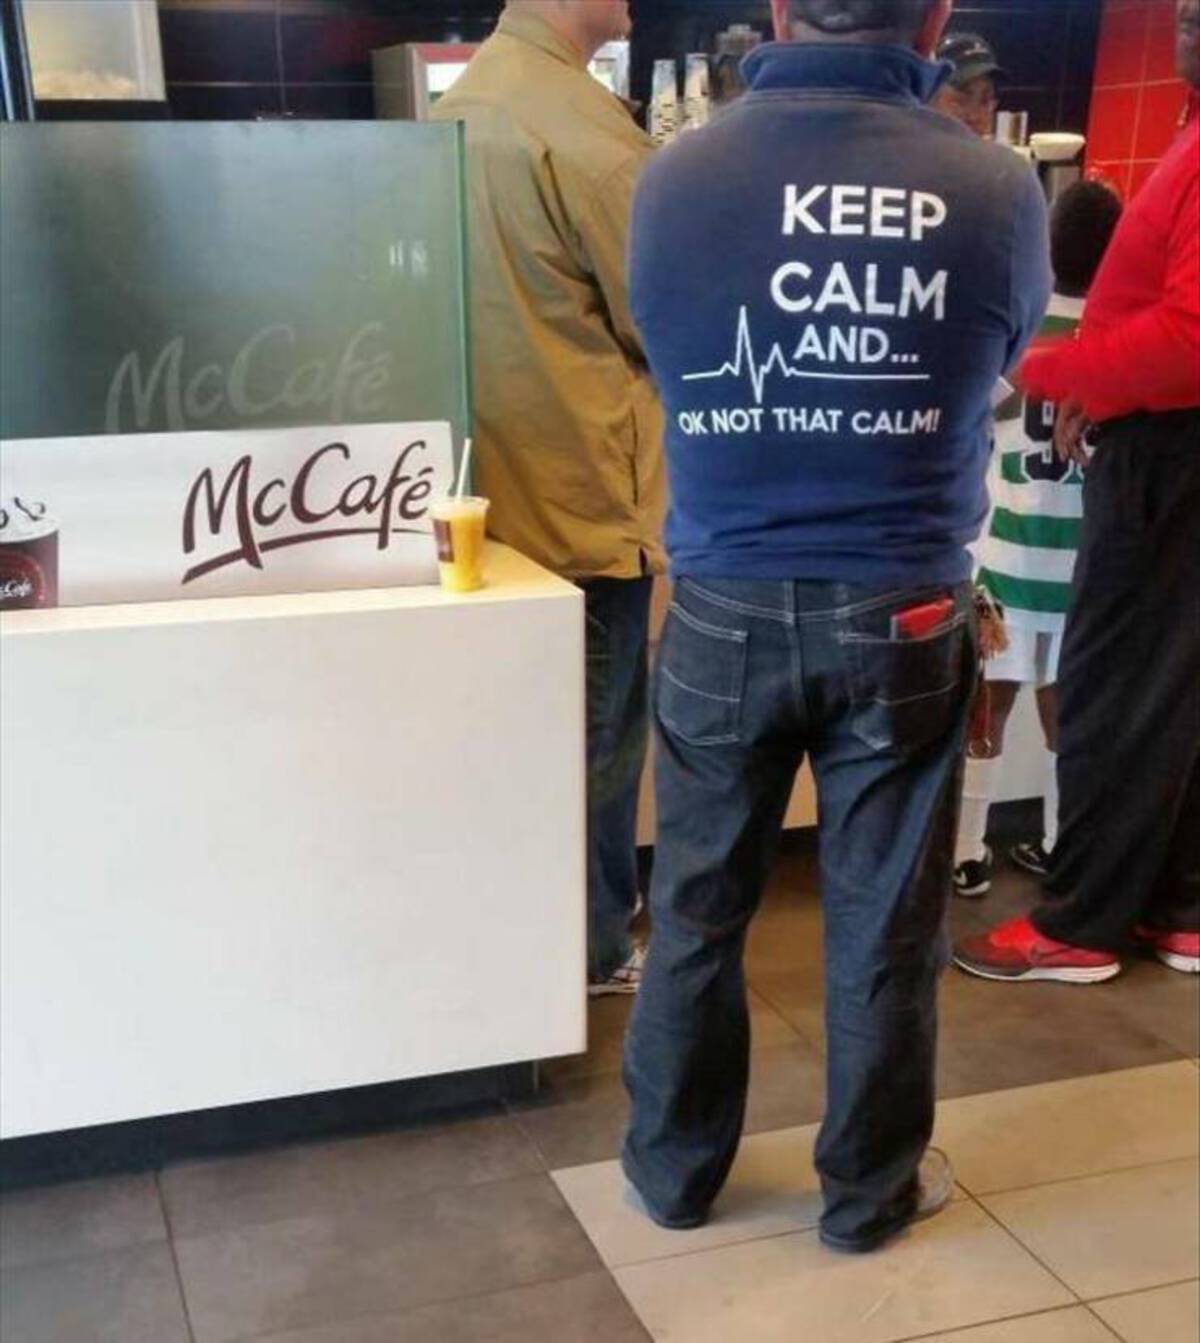 pocket - McCafe McCafe Keep Calm And... Ok Not That Calm!